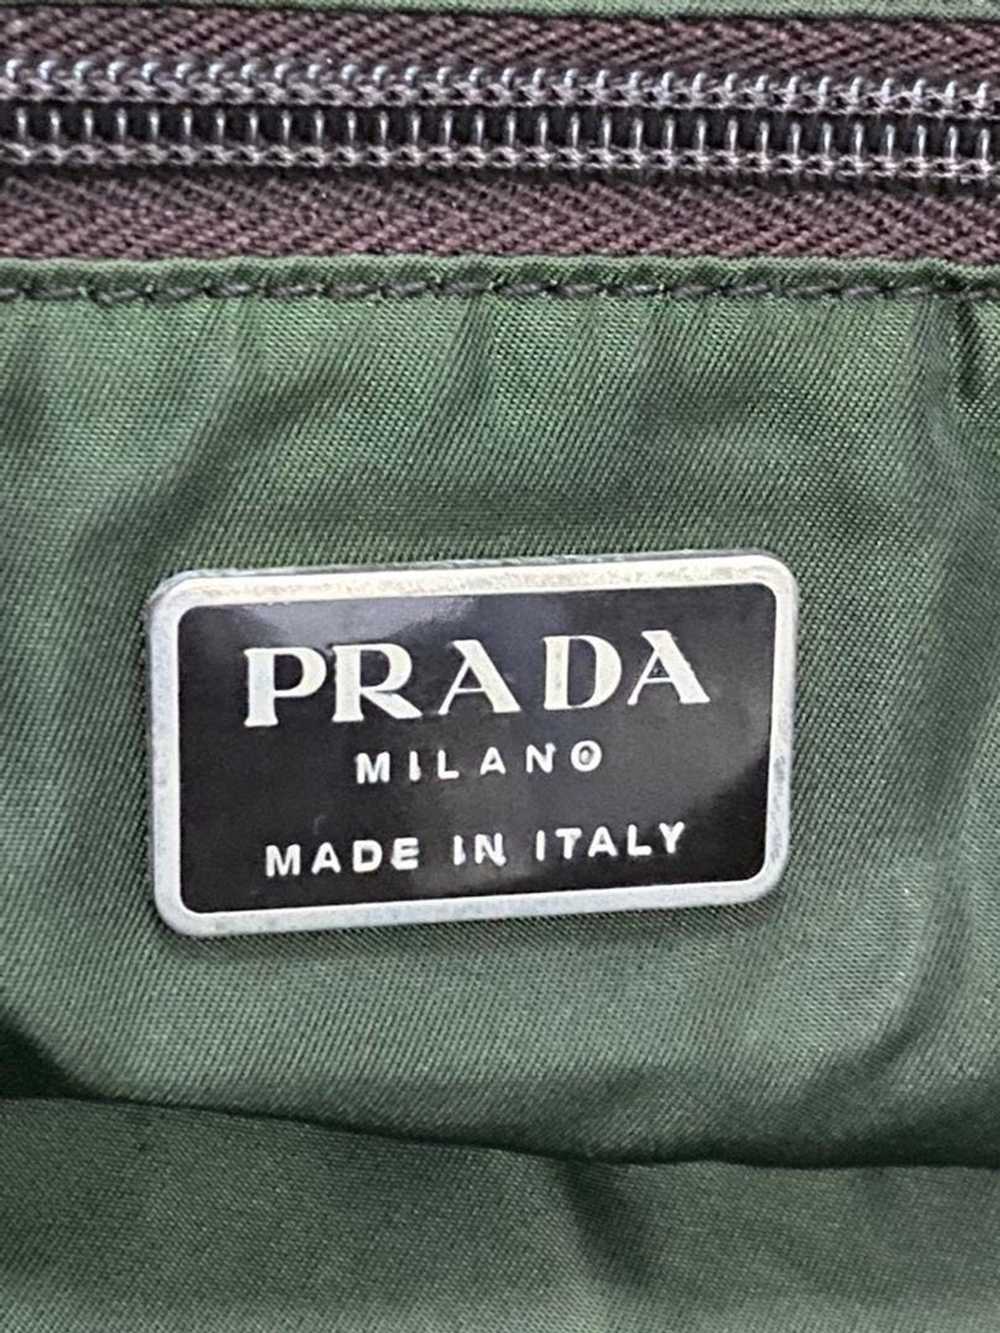 Prada Prada plastic handle handbag nylon - image 10